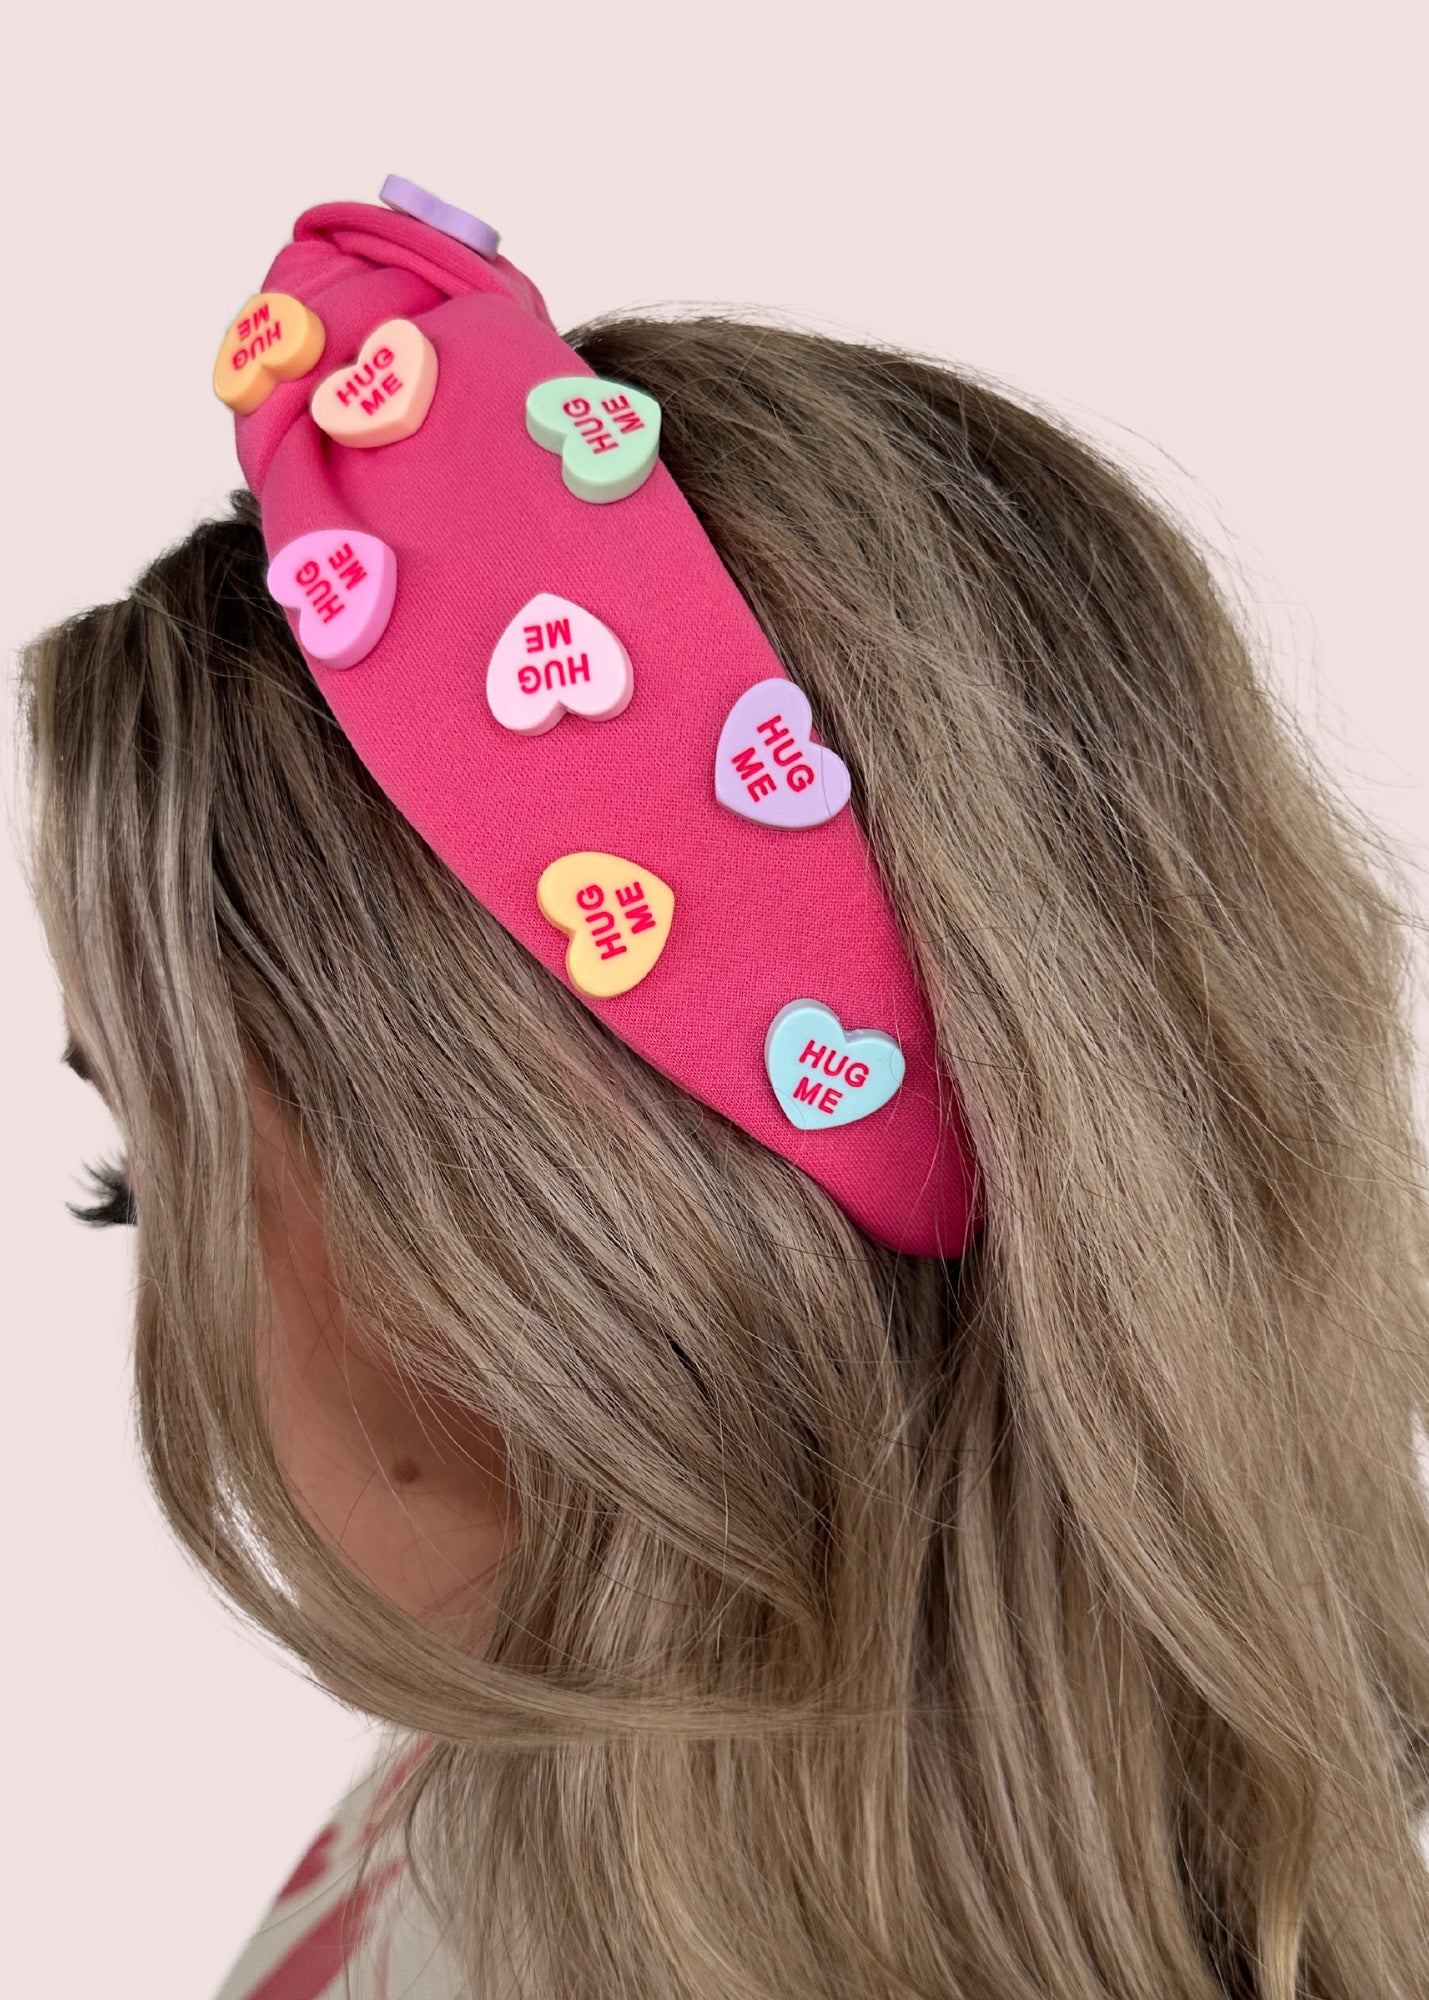 Sweetheart Valentine's Headband - Hot Pink